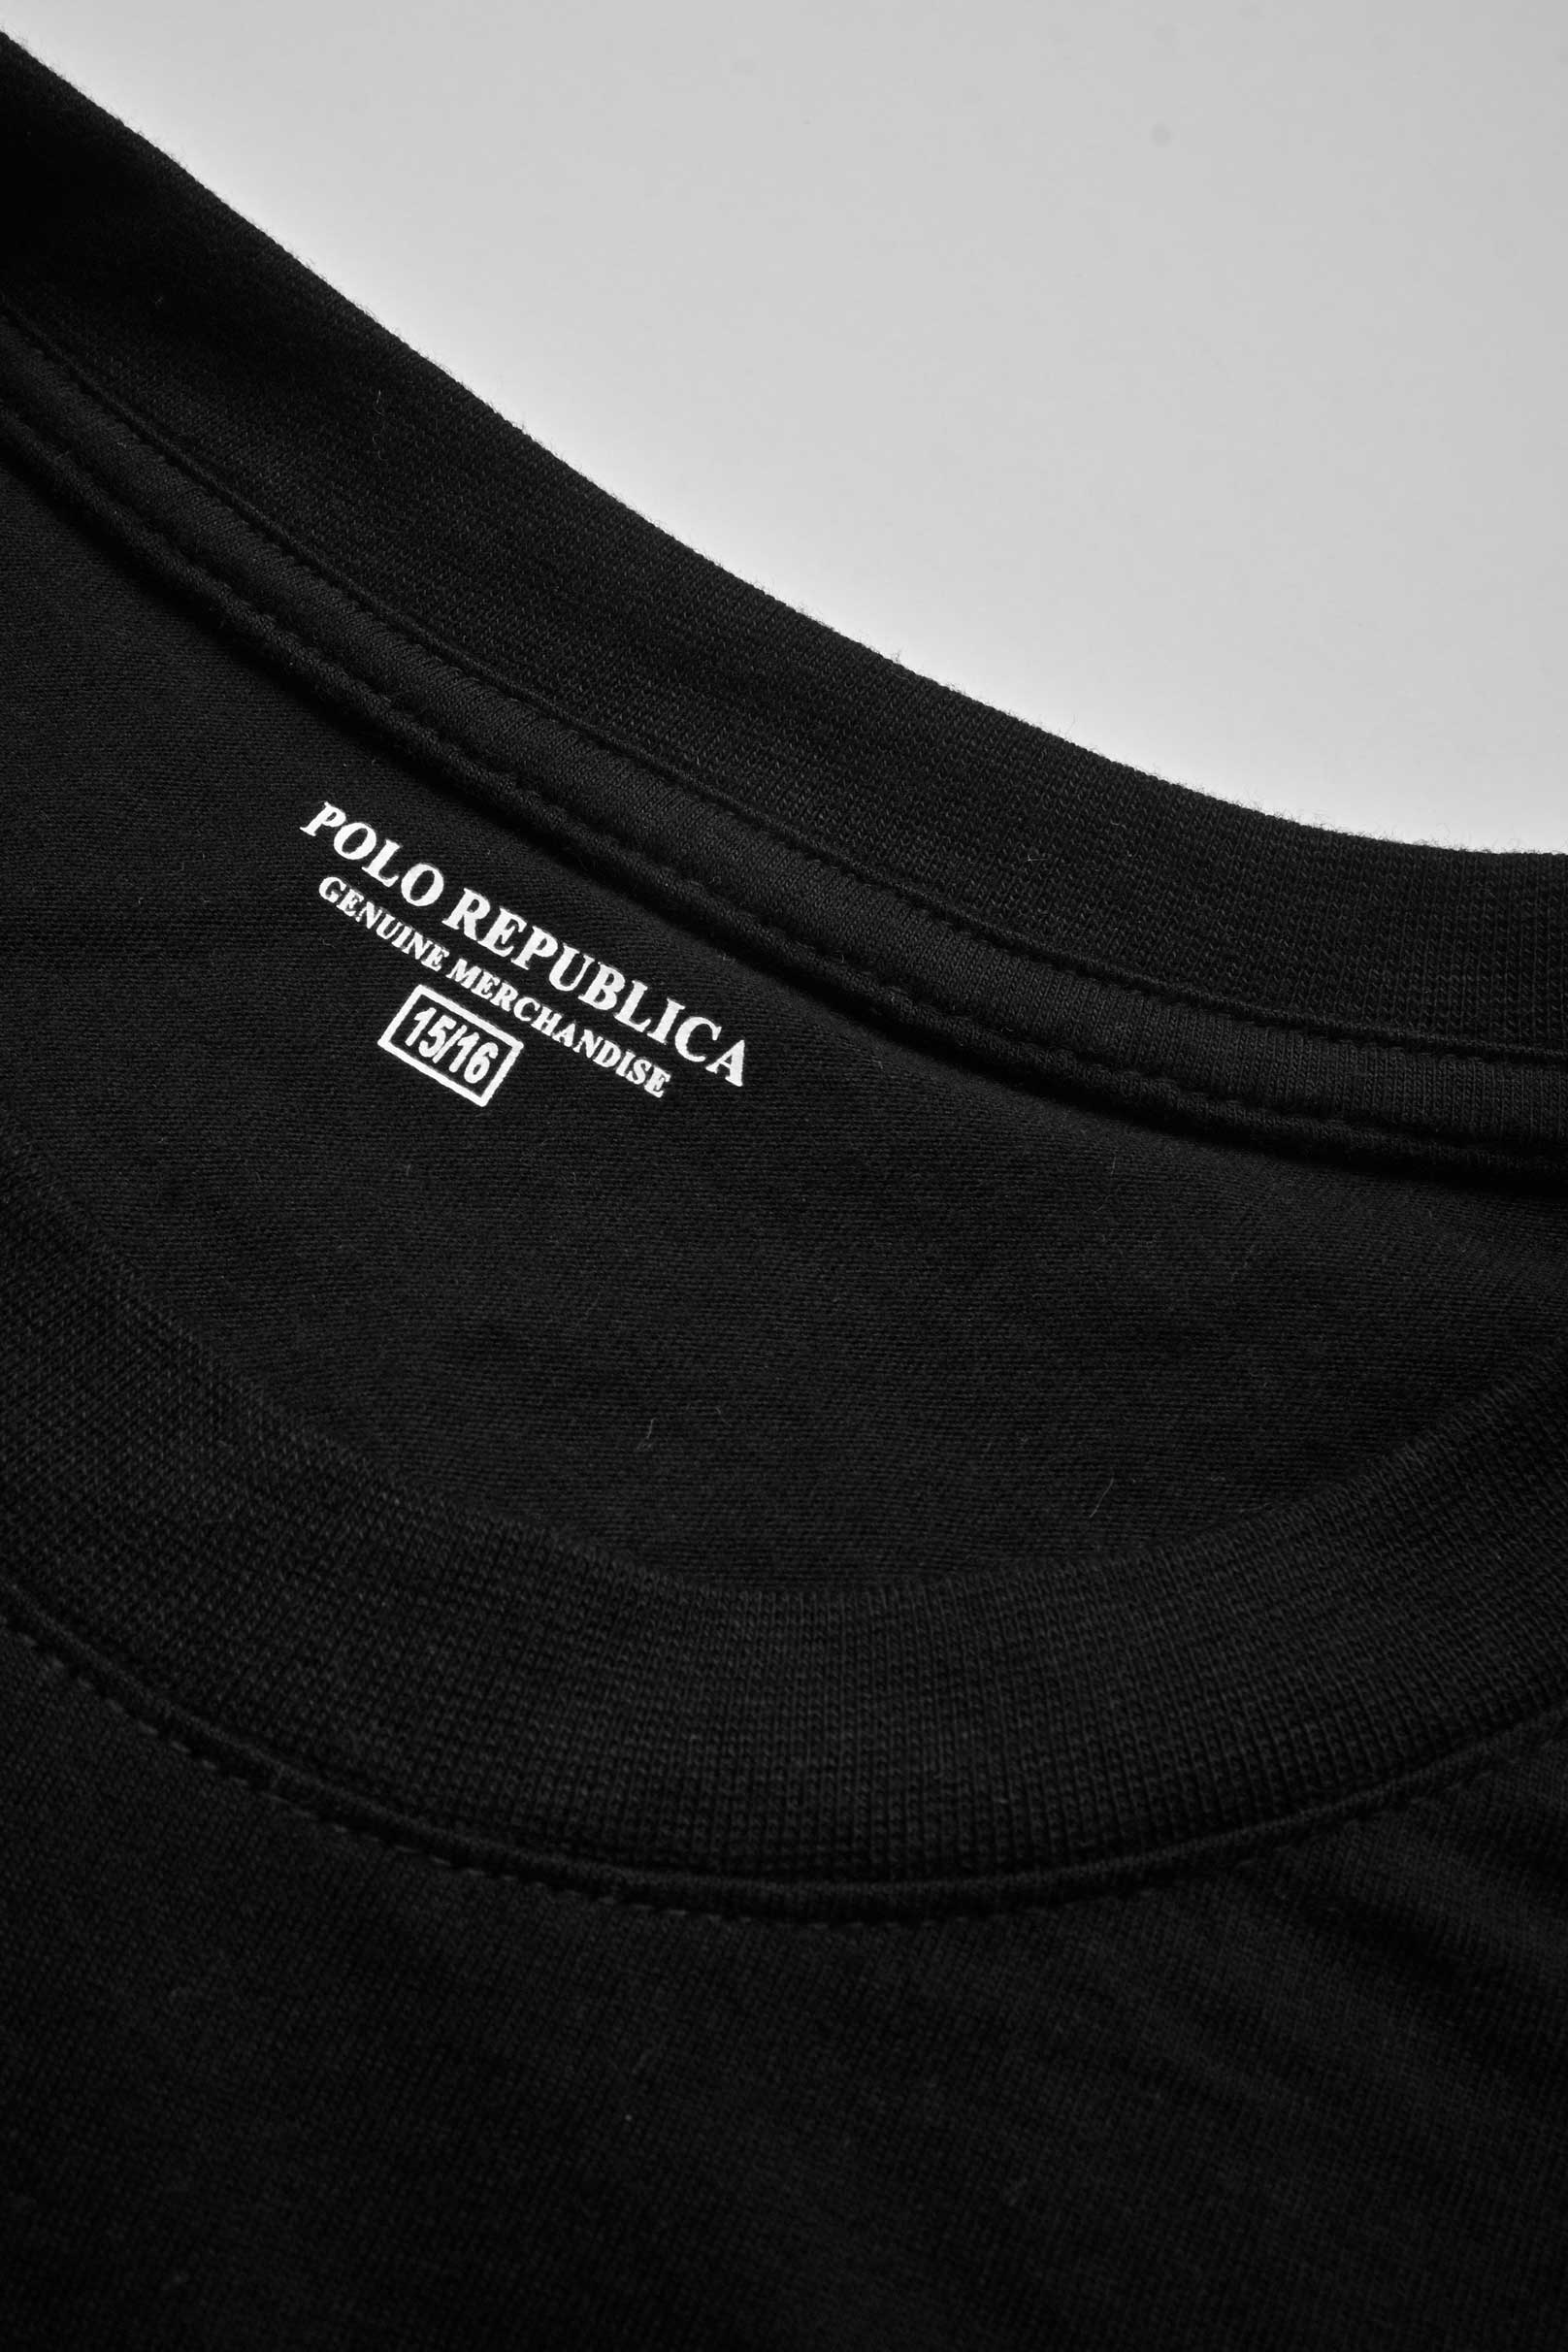 Polo Republica Boy's Eat Sleep Printed Tee Shirt Boy's Tee Shirt Polo Republica 